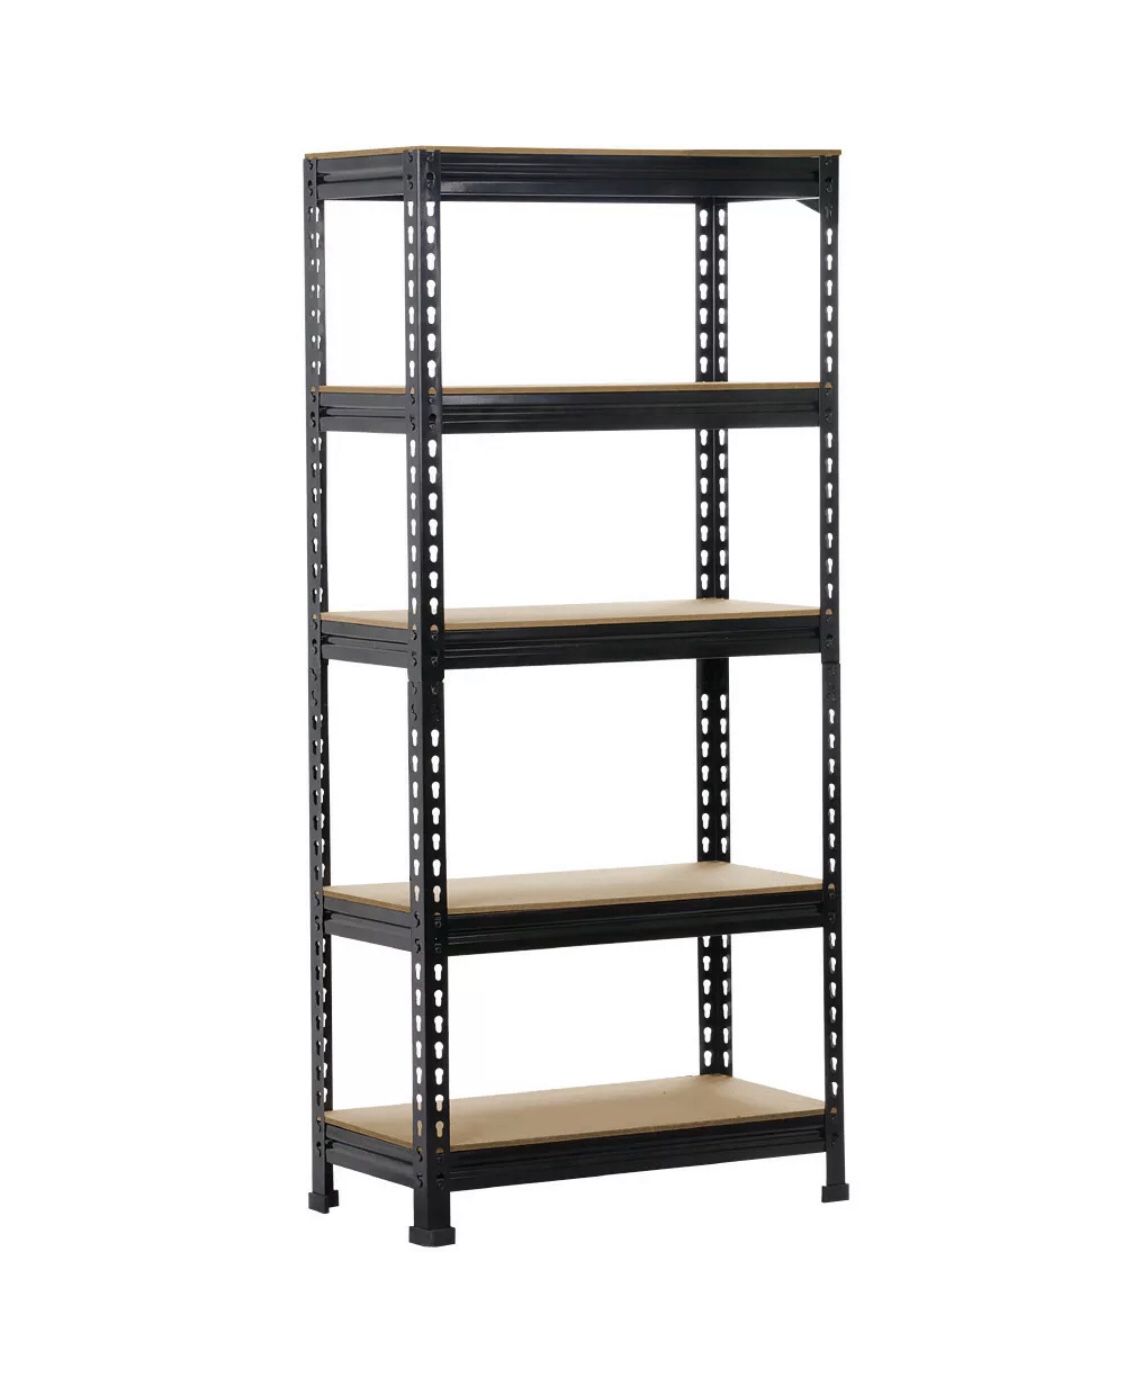 ⚡️ BRAND NEW 5-Level Adjustable Garage Shelf Unit